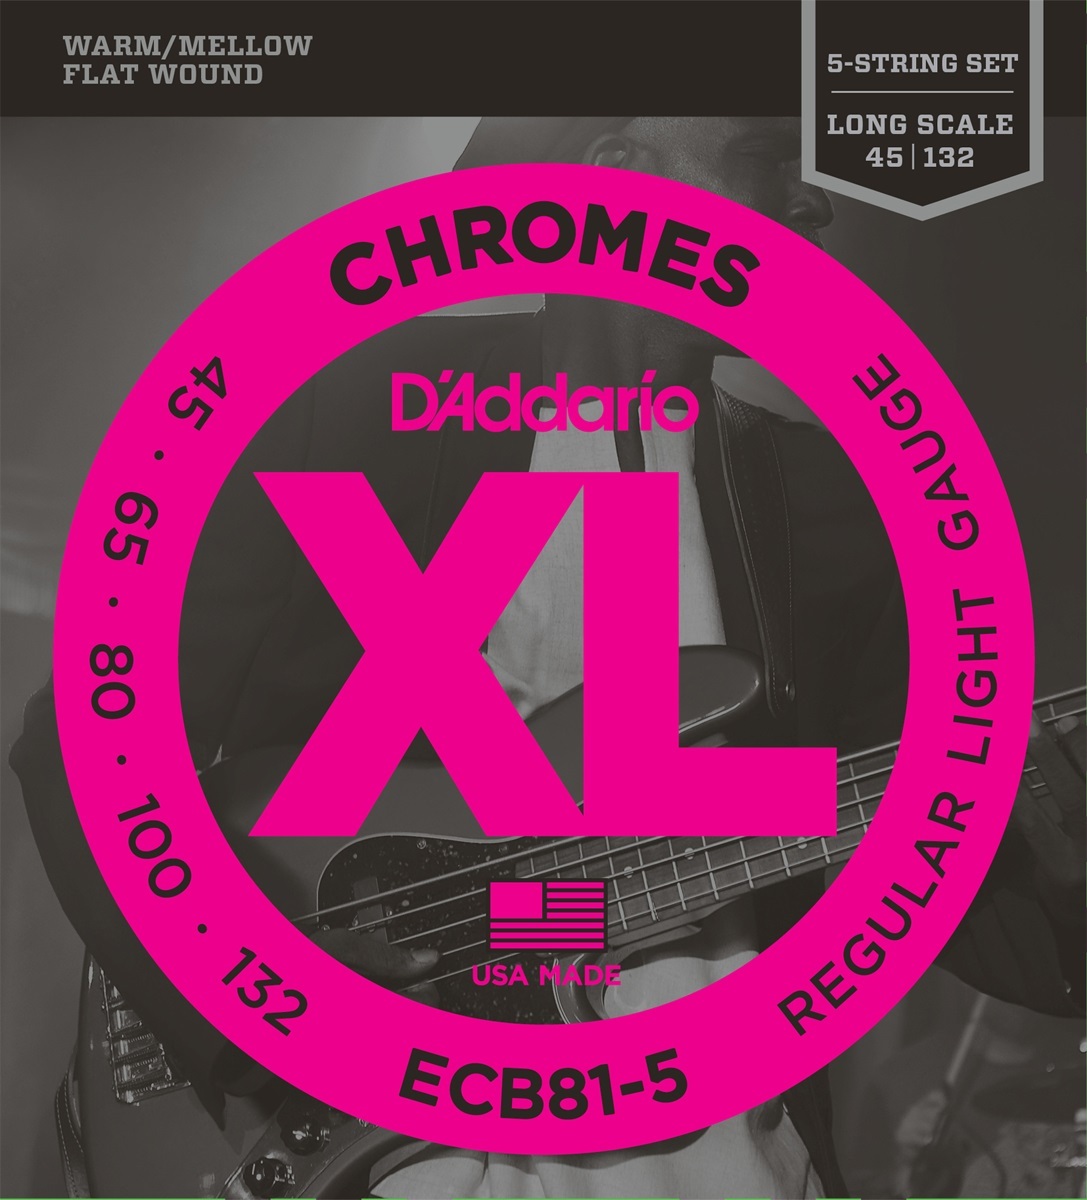 D'addario Jeu De 5 Cordes Basse Elec. 5c Chromes Long Scale 045.132 Ecb81.5 - Elektrische bassnaren - Main picture